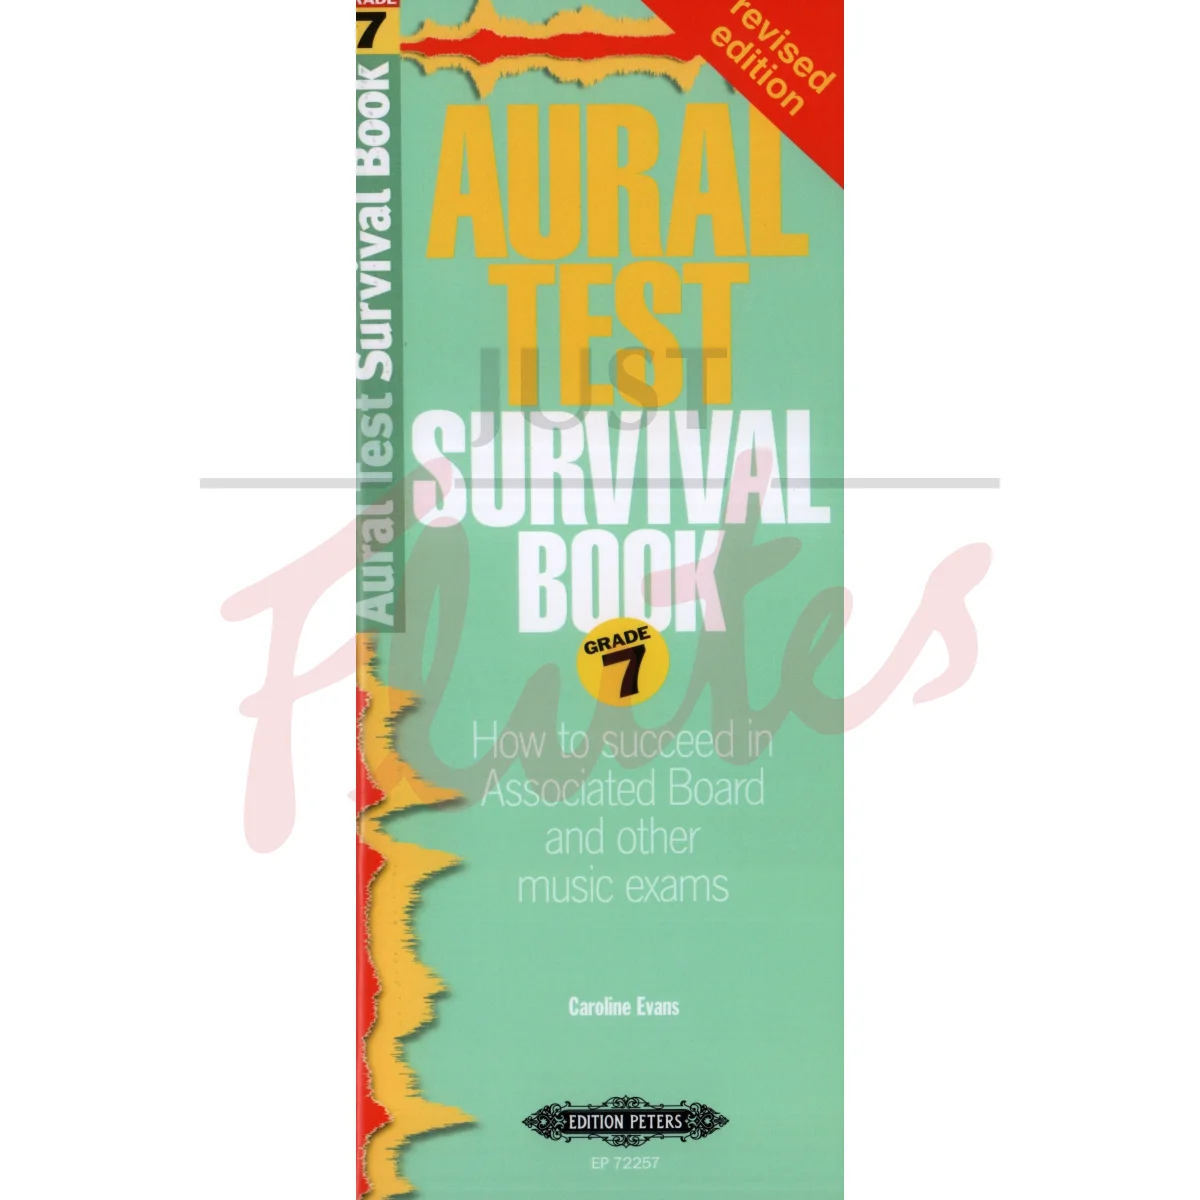 Aural Test Survival Book Grade 7